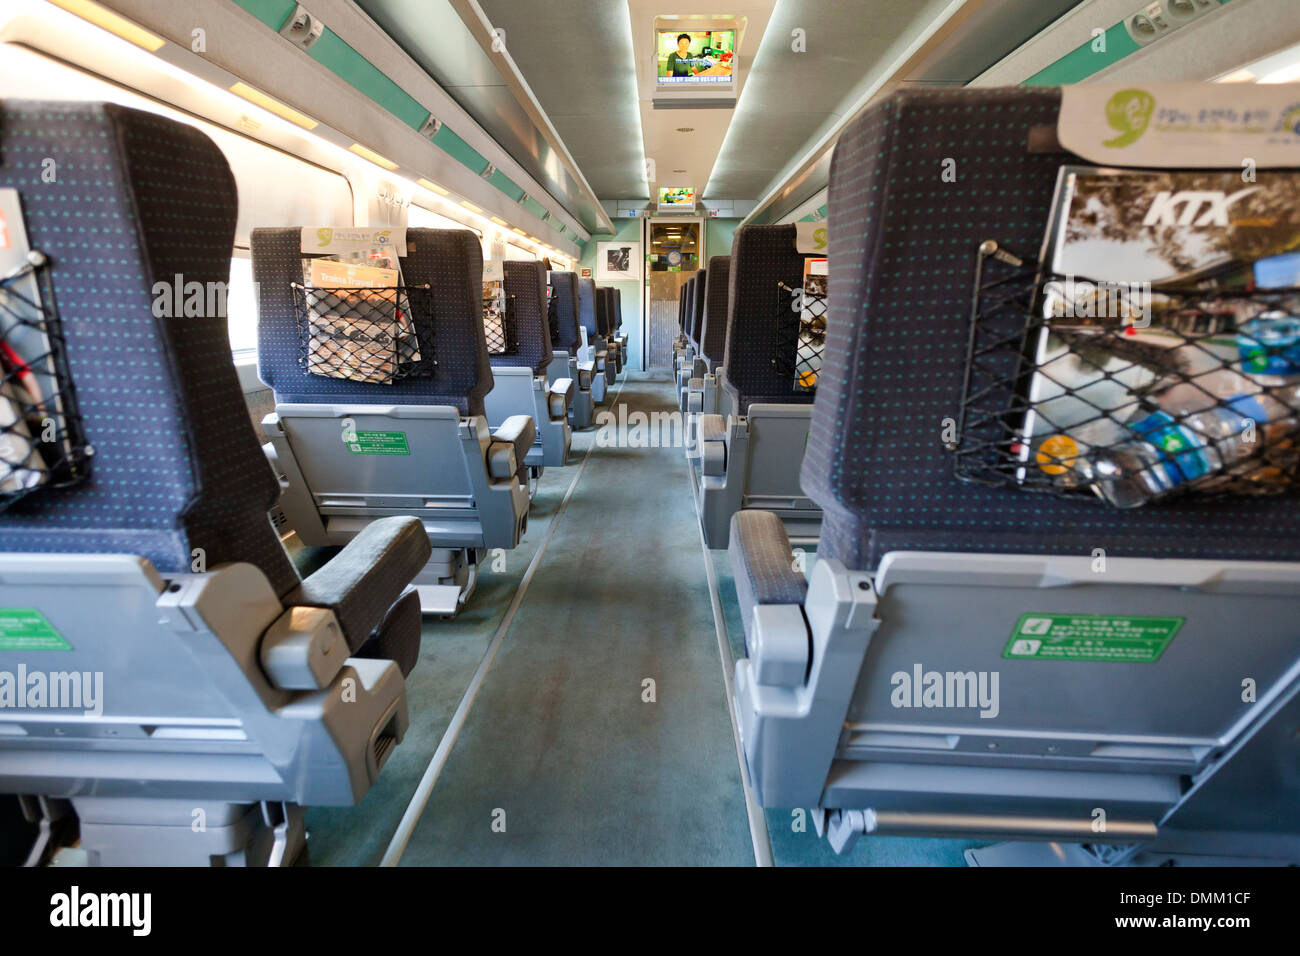 KTX (Korea Train eXpress) first class car interior - South Korea Stock Photo